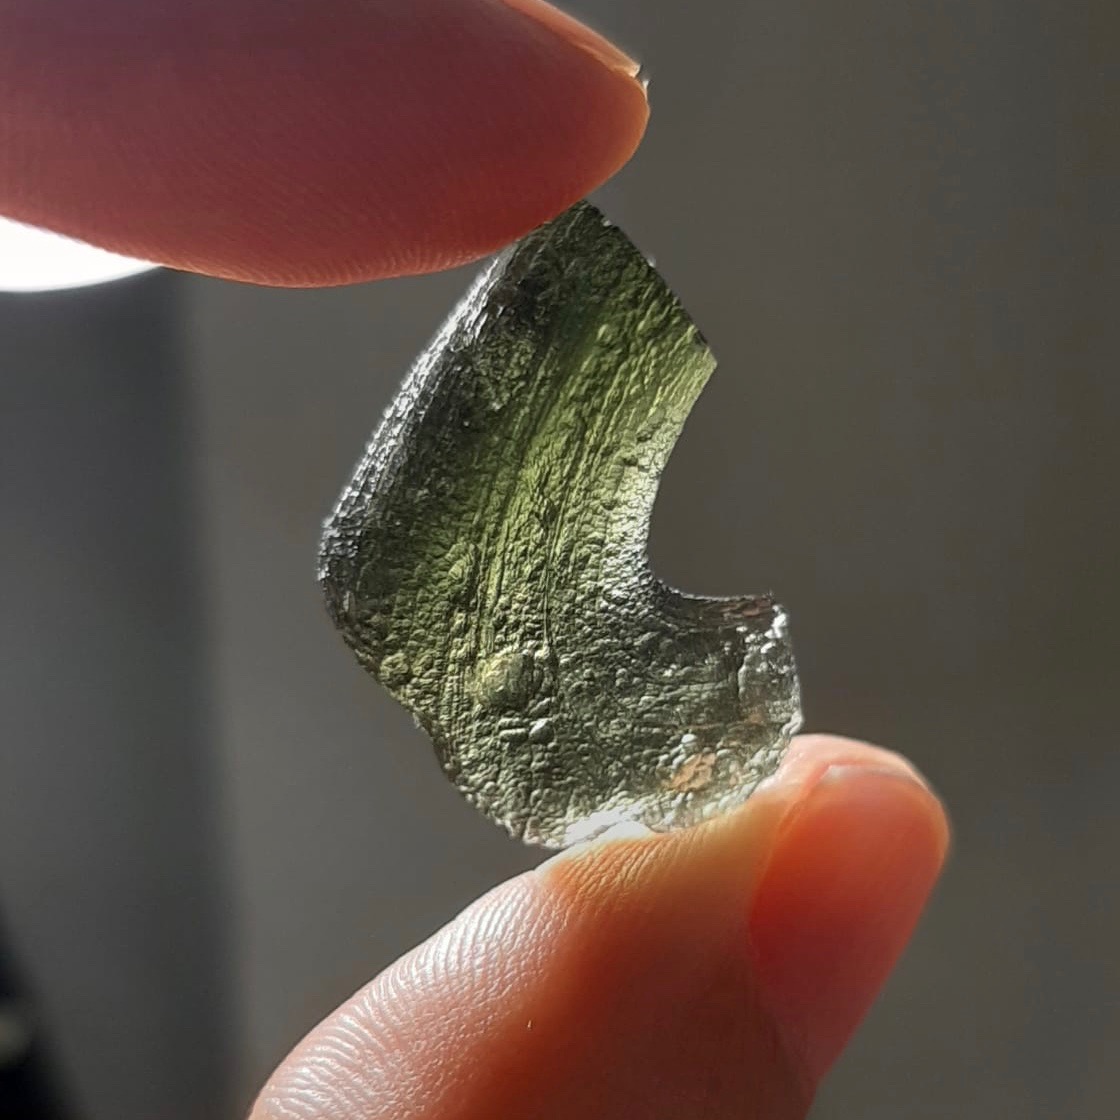 Moldavite. Meteorite impact glass.